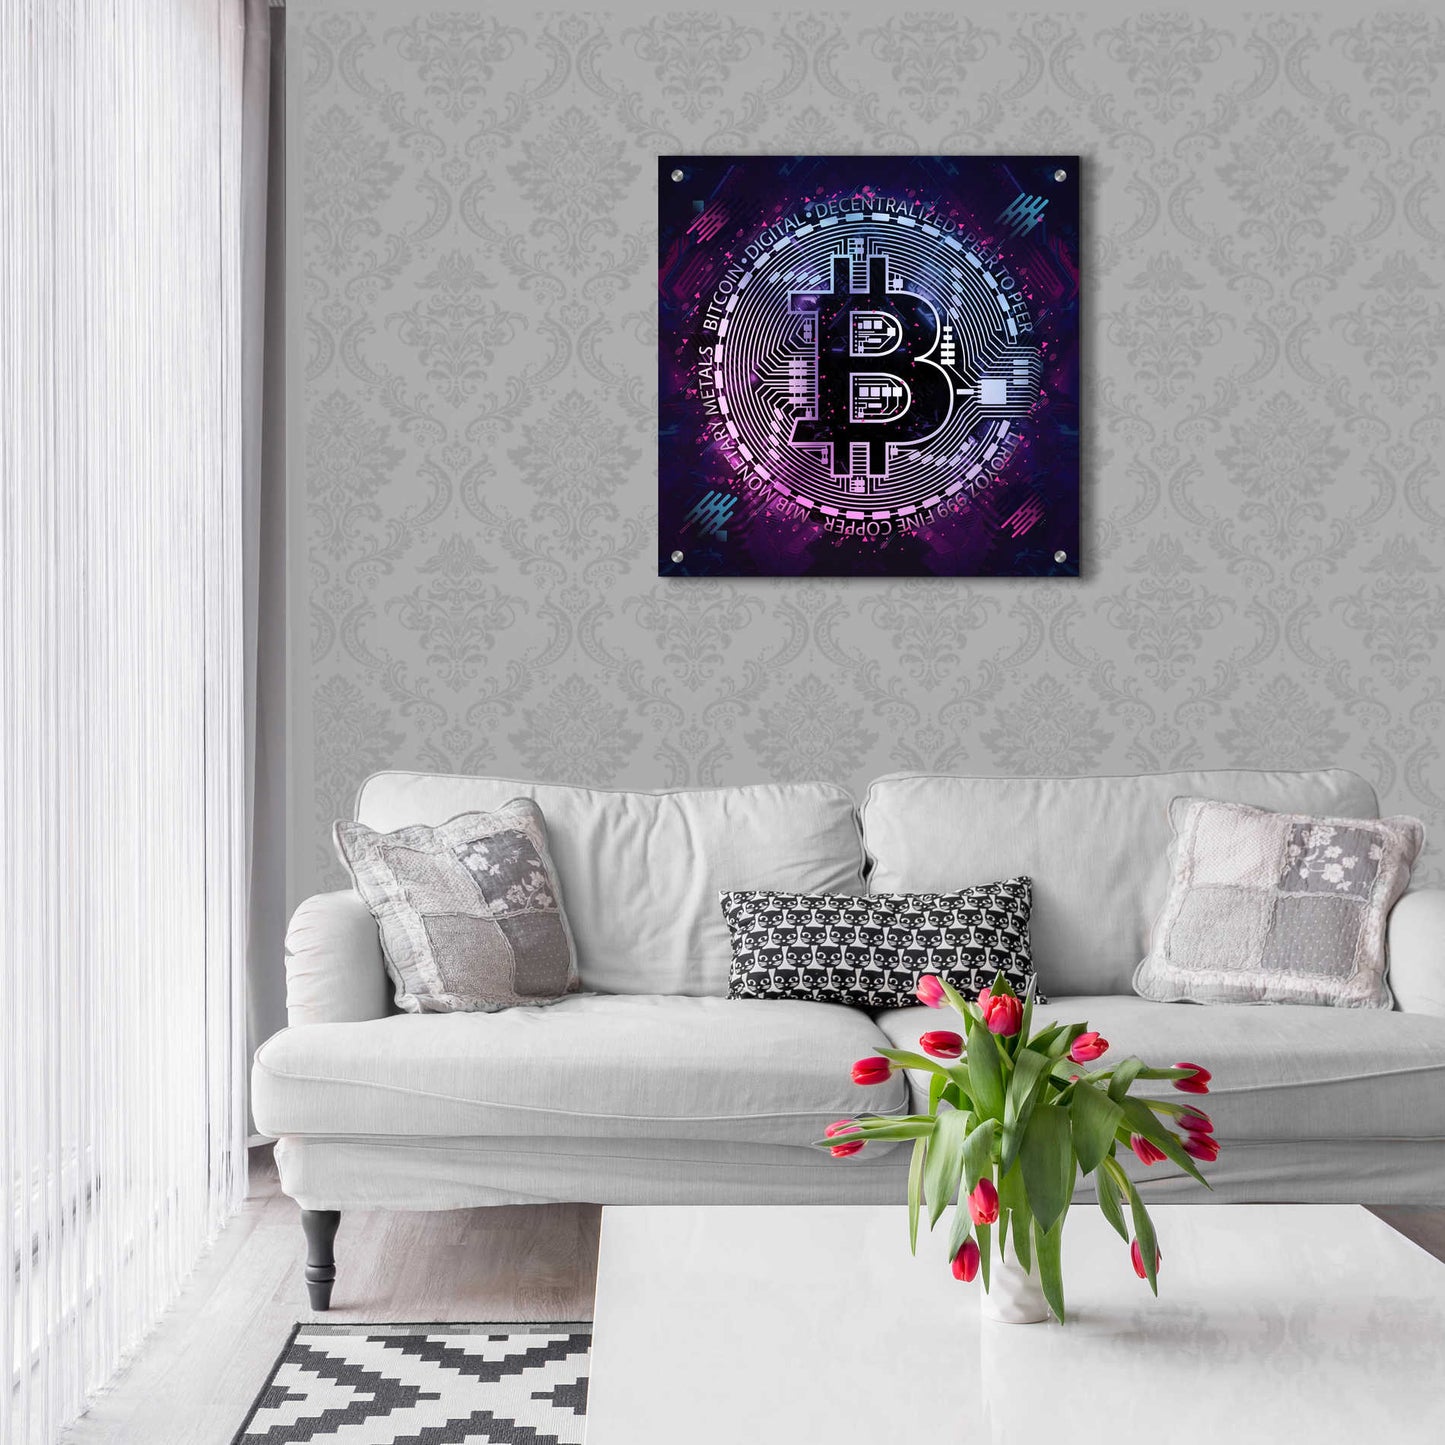 Epic Art 'Bitcoin 80s' by Cameron Gray Acrylic Glass Wall Art,24x24